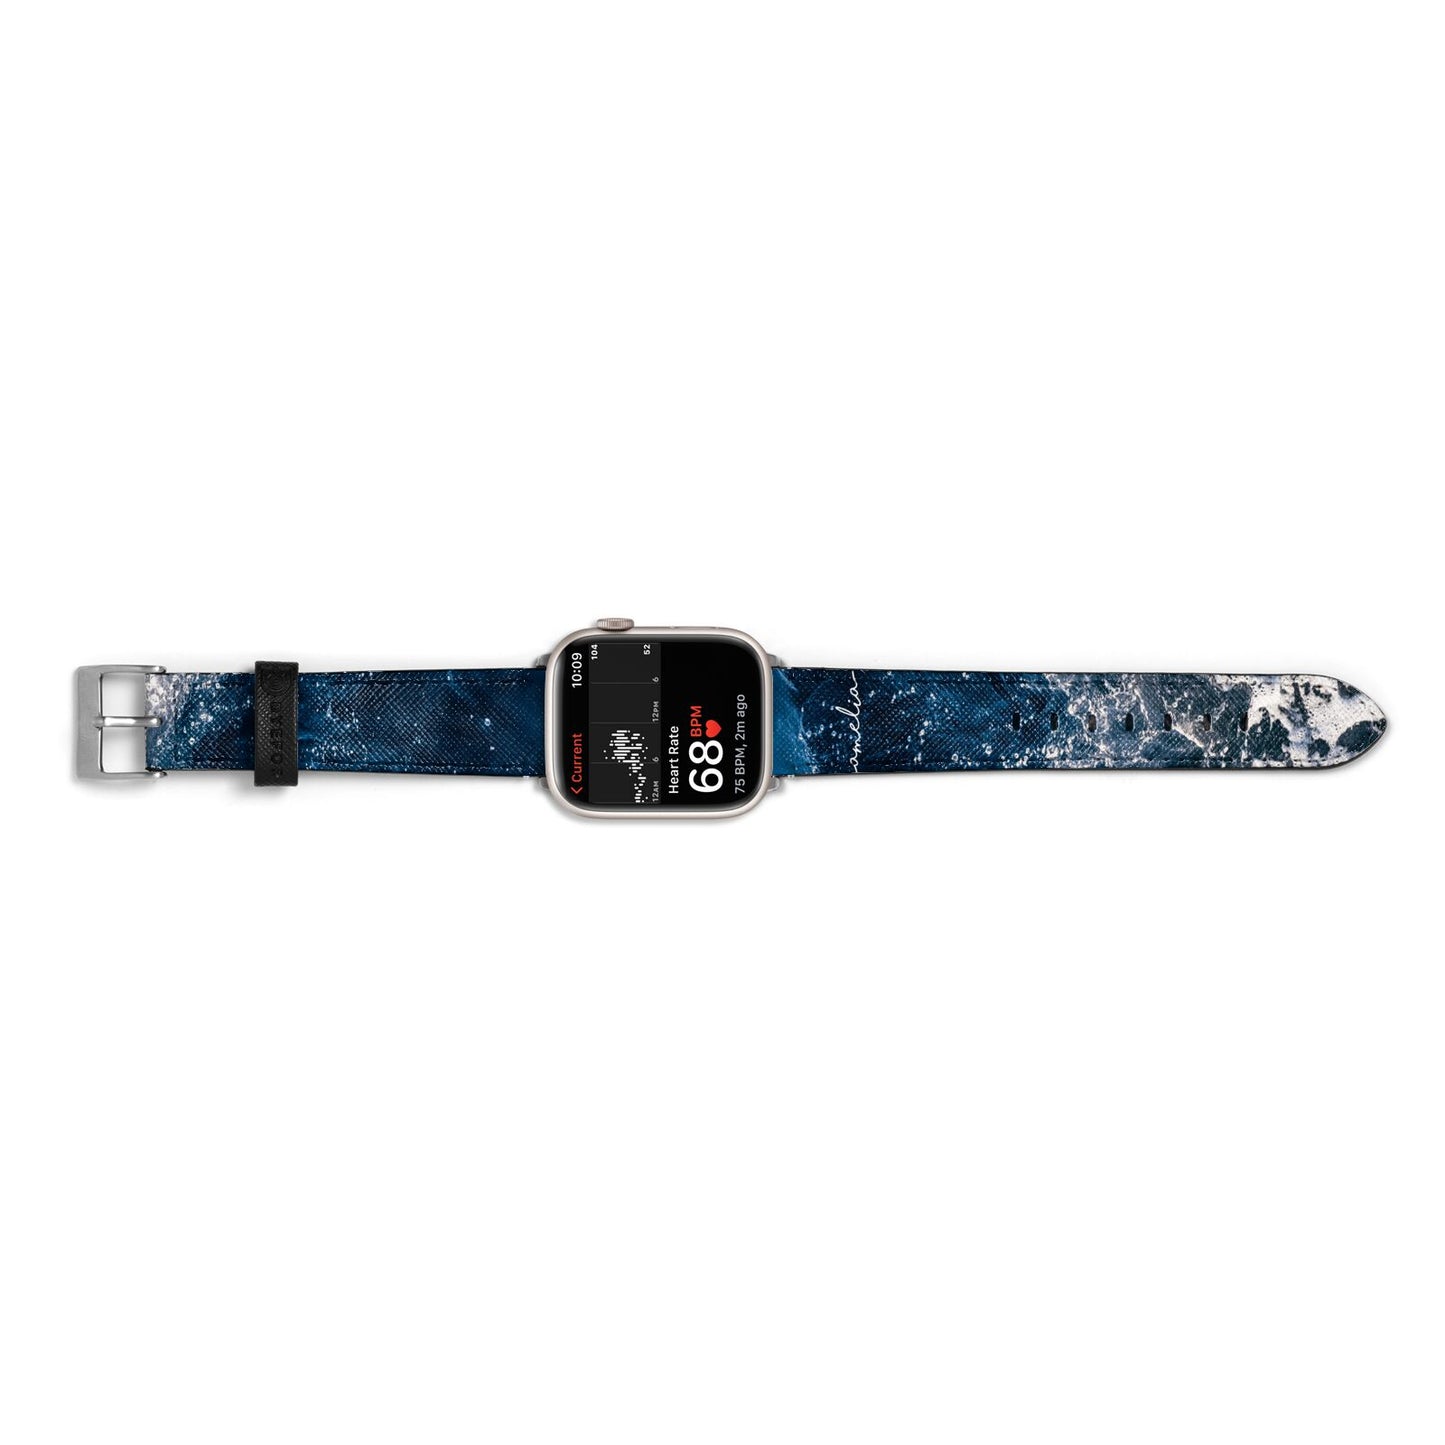 Custom Sea Apple Watch Strap Size 38mm Landscape Image Silver Hardware